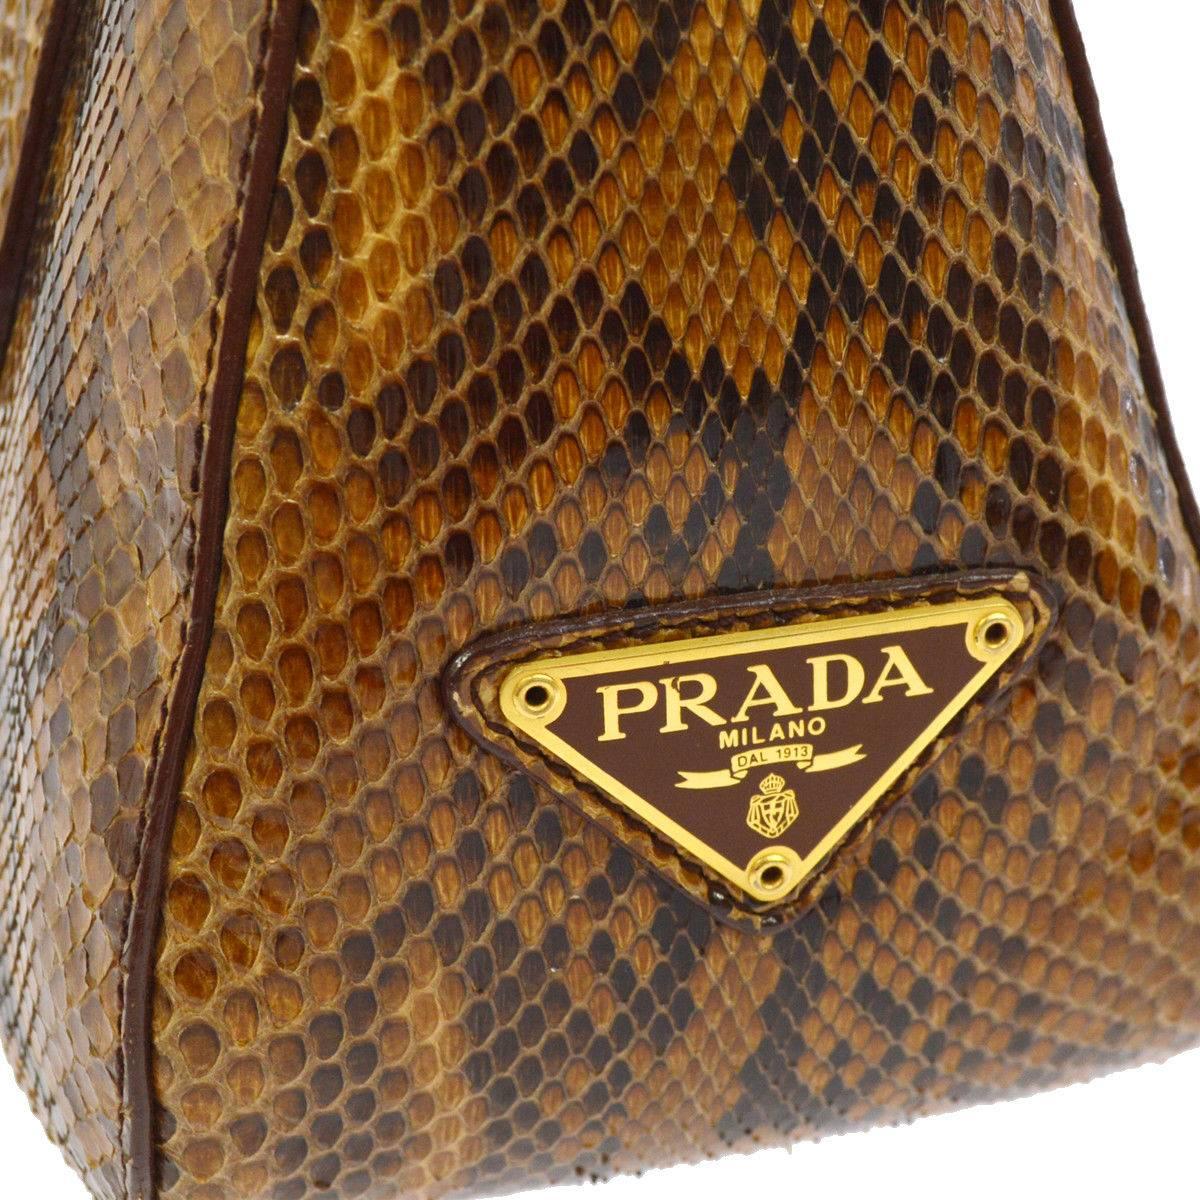 Prada Cognac Snakeskin Top Handle Satchel Evening Bag with Shoulder Strap Bag

Snakeskin (Python)
Woven lining
Gold tone hardware
Made in Italy 
Handle drop 4